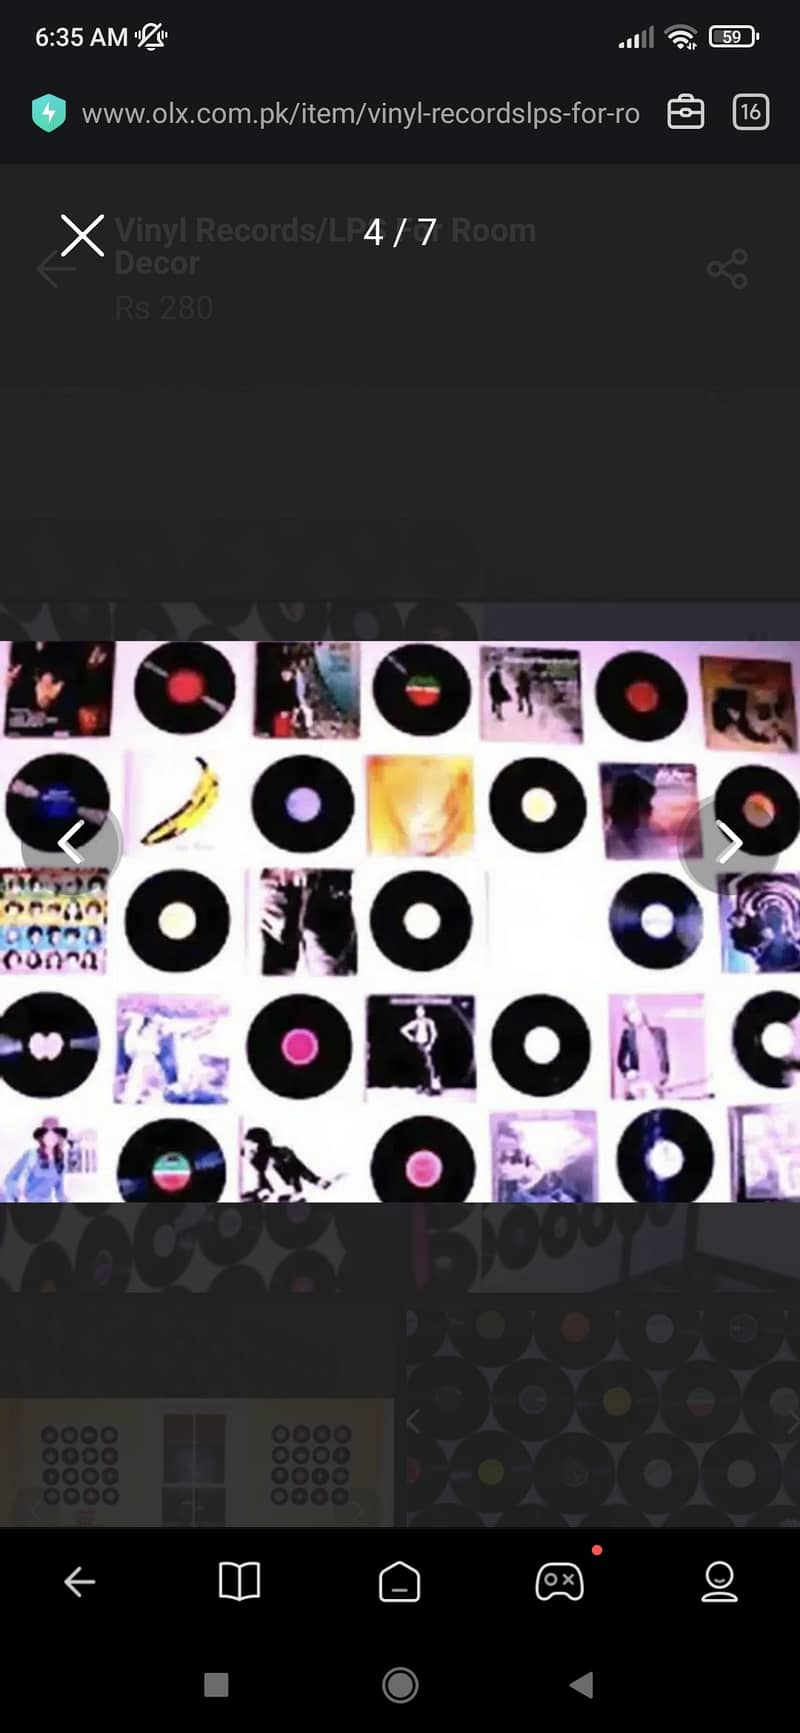 Vinyl records/LPS FOR ROOM DECOR 3